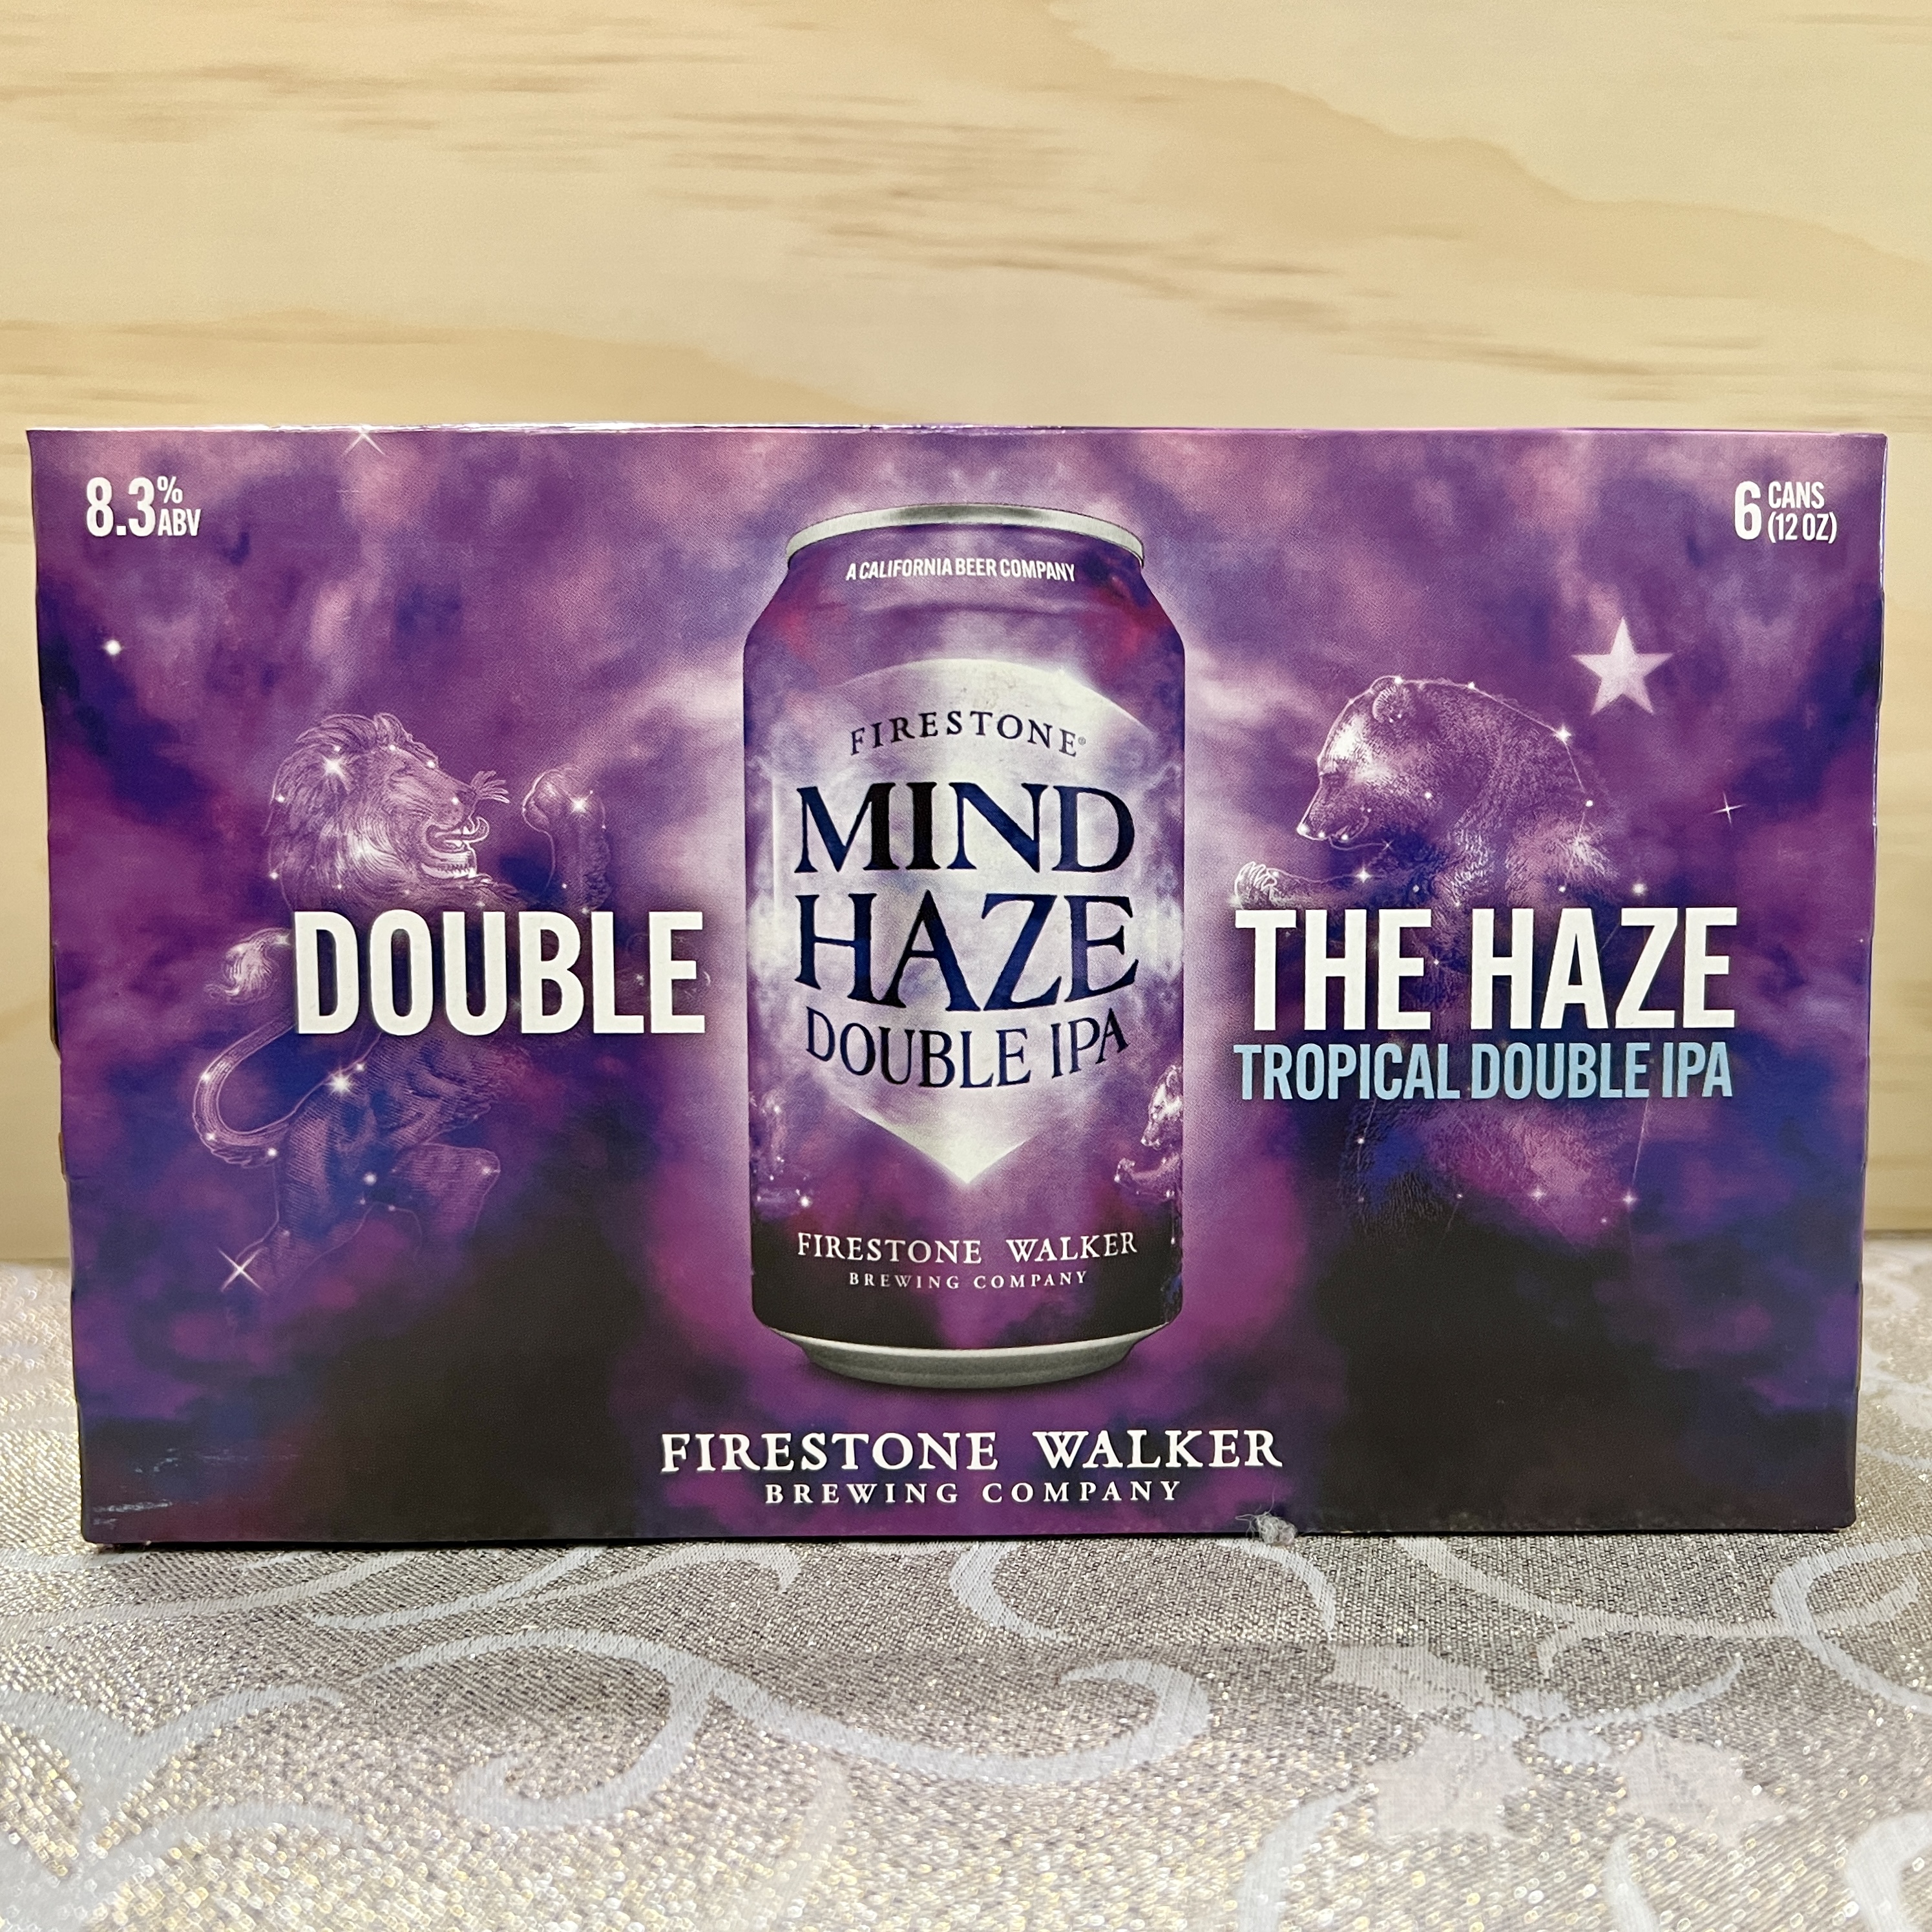 Firestone Mind Haze Double IPA 6 x 12oz cans